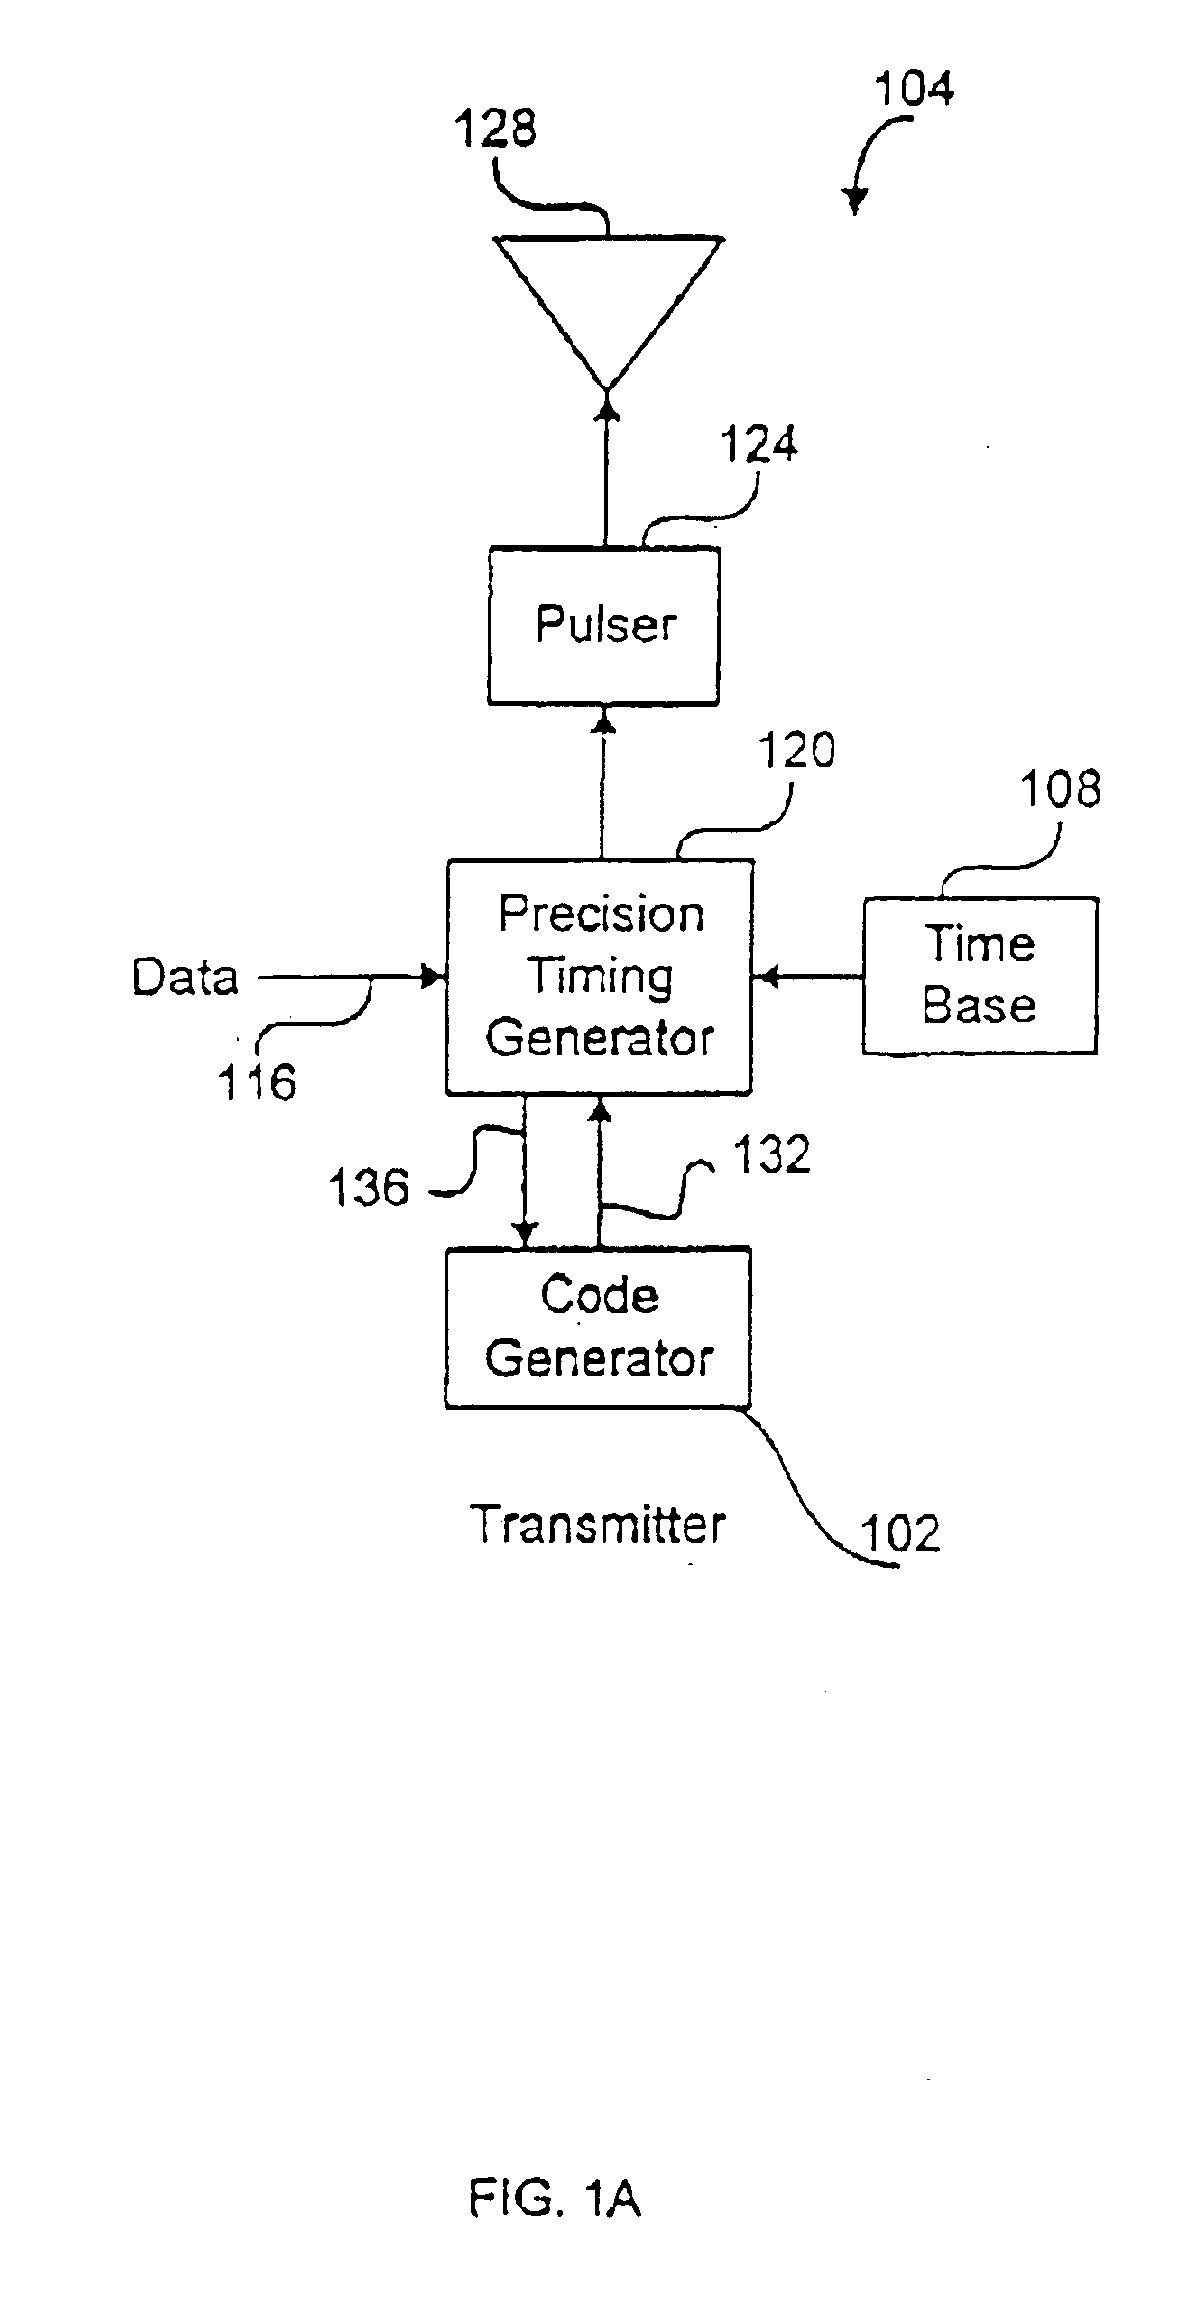 Precision timing generator apparatus and associated methods